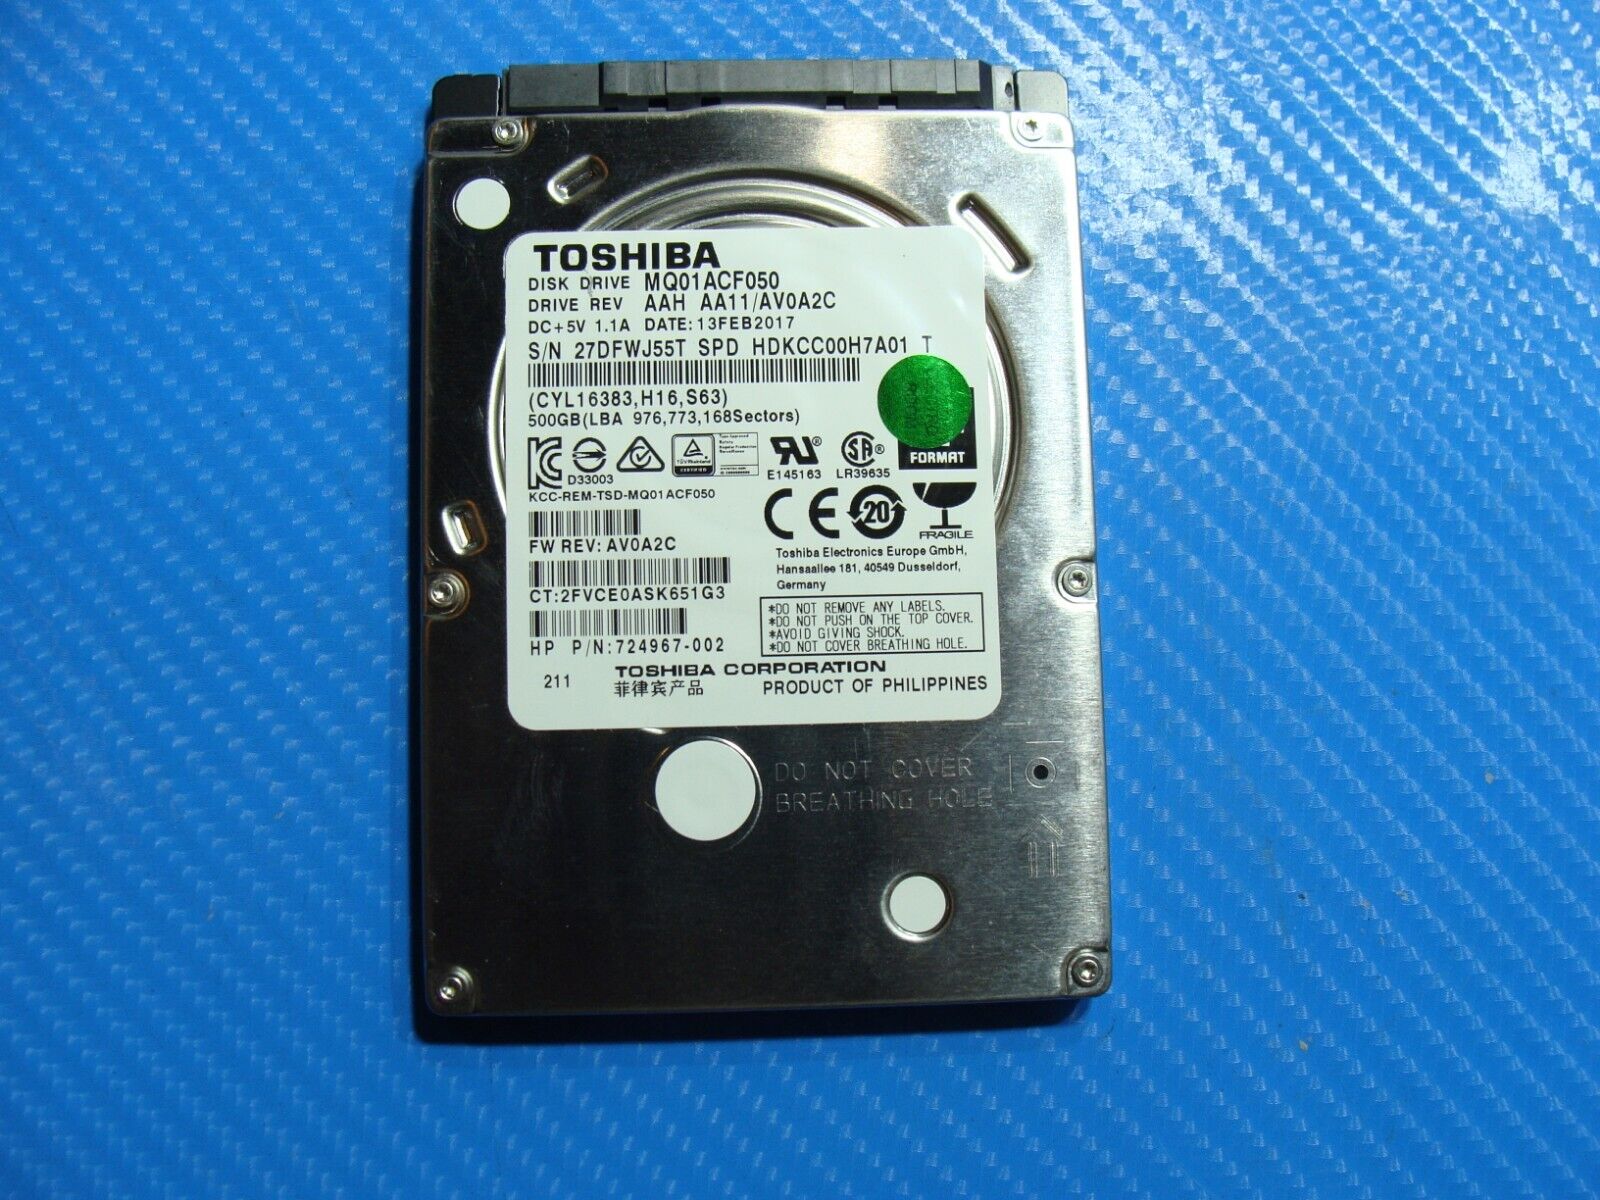 HP 250 G5 Toshiba SATA 2.5 500GB HDD Hard Drive MQ01ACF050 724967-002